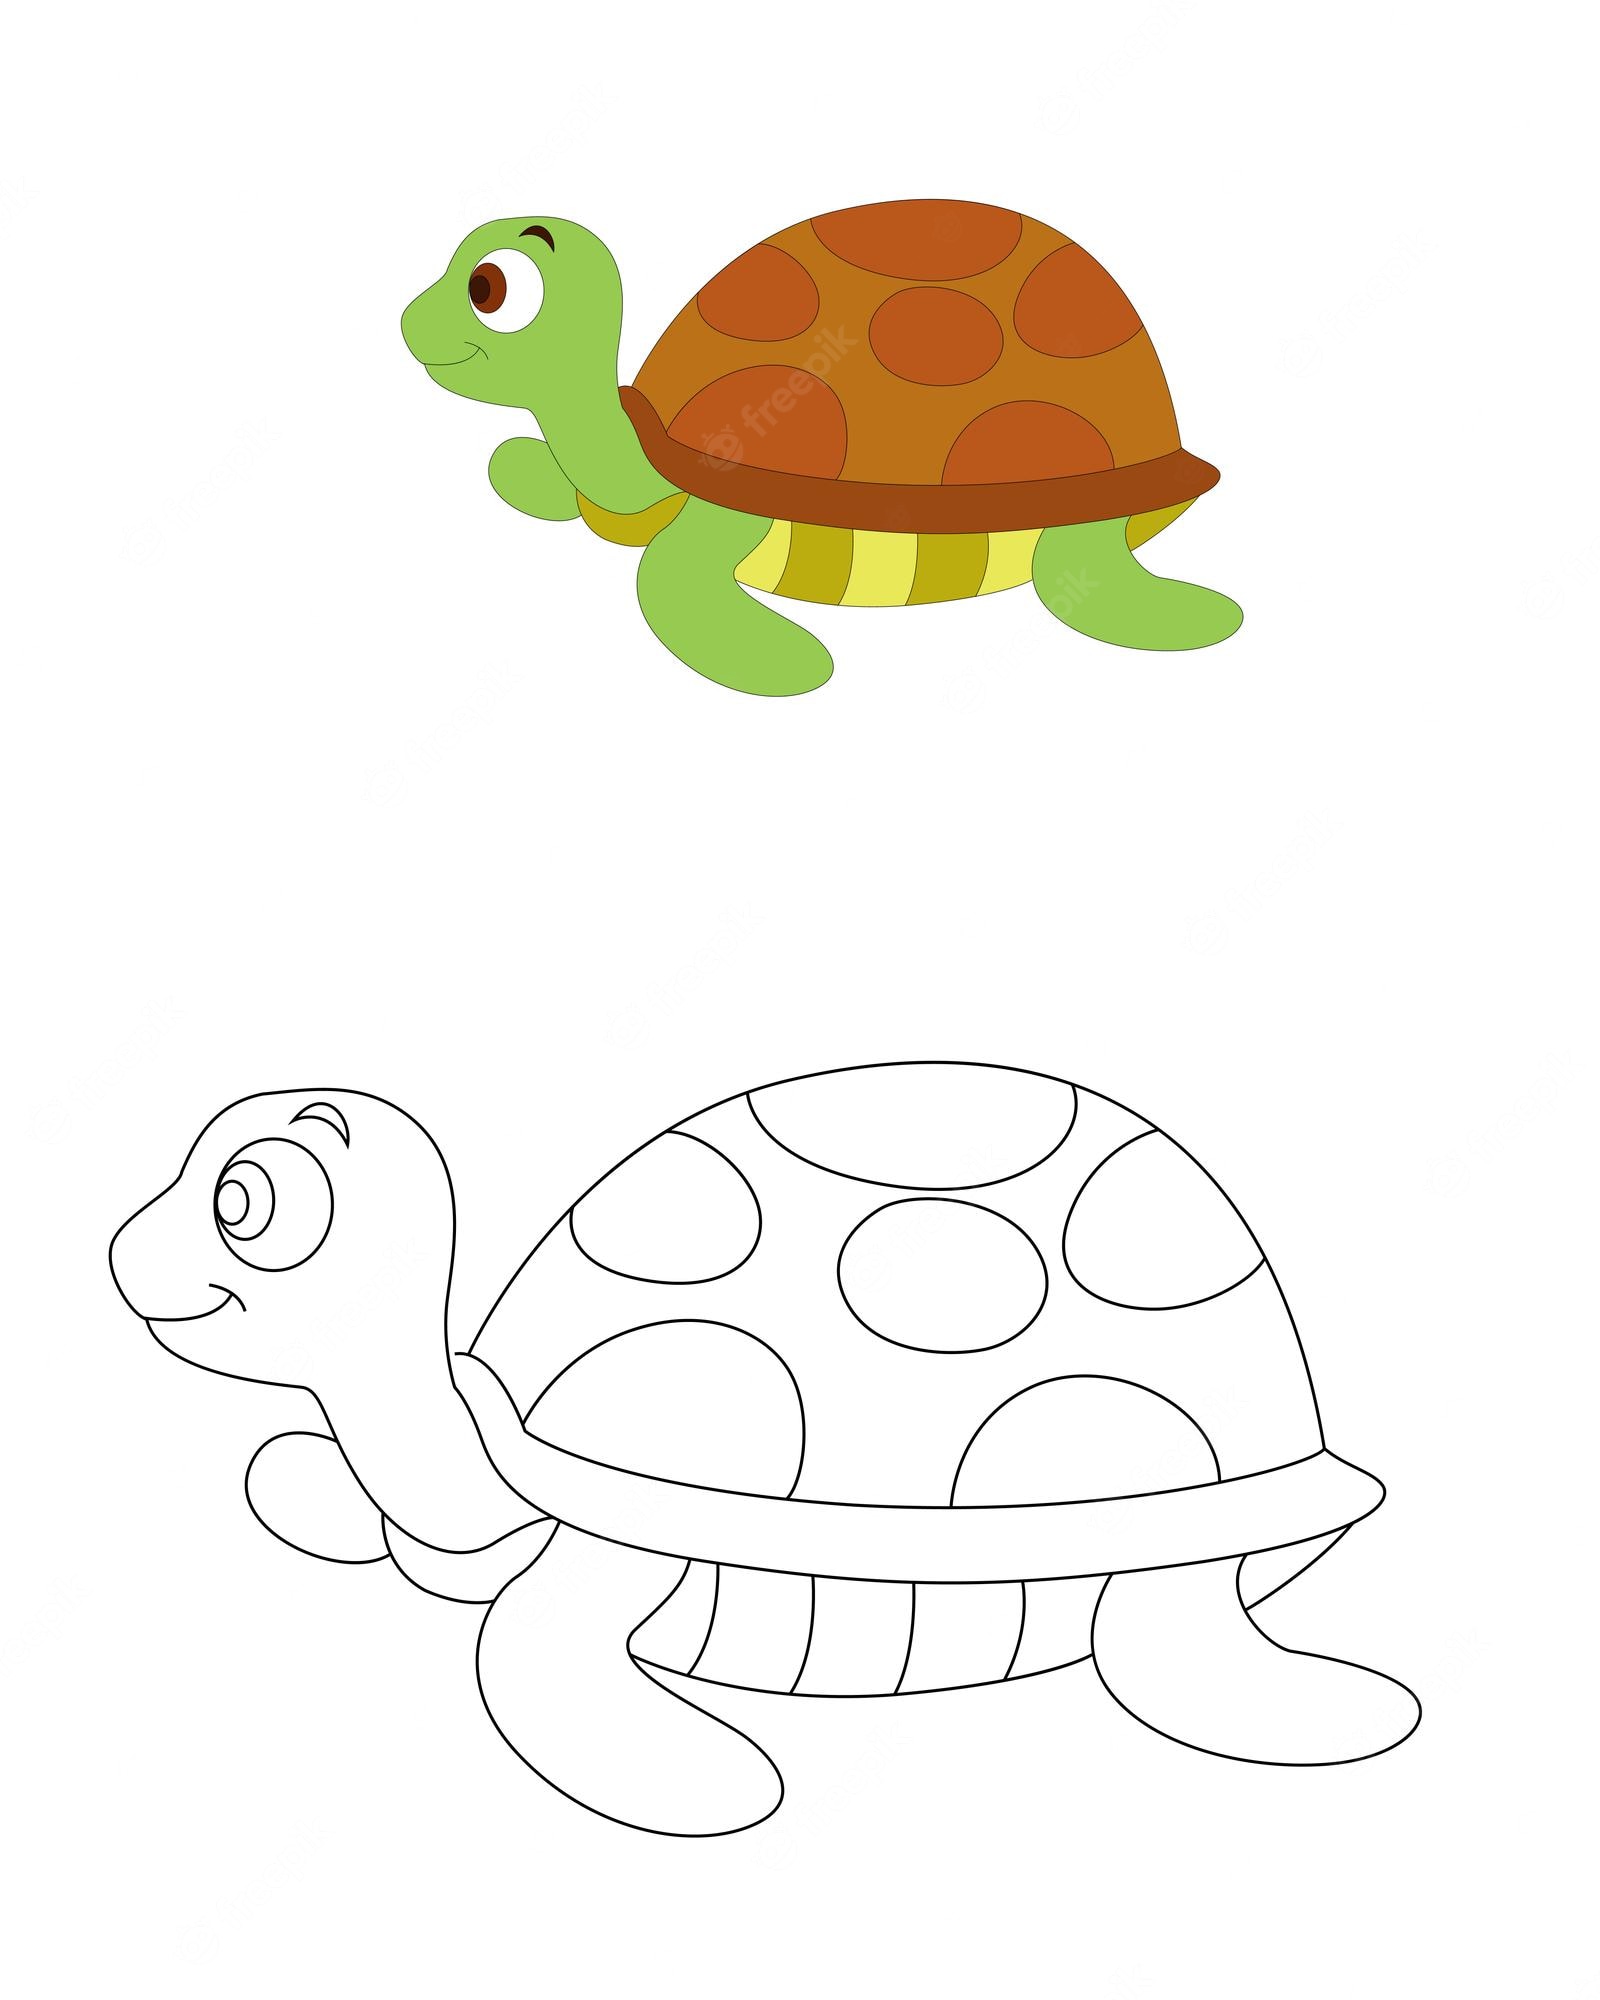 Retro Cartoon Mono Line Style Drawing Radiated Tortoise Endangered Wildlife  Stock Illustration by ©PantherMediaSeller #503807596